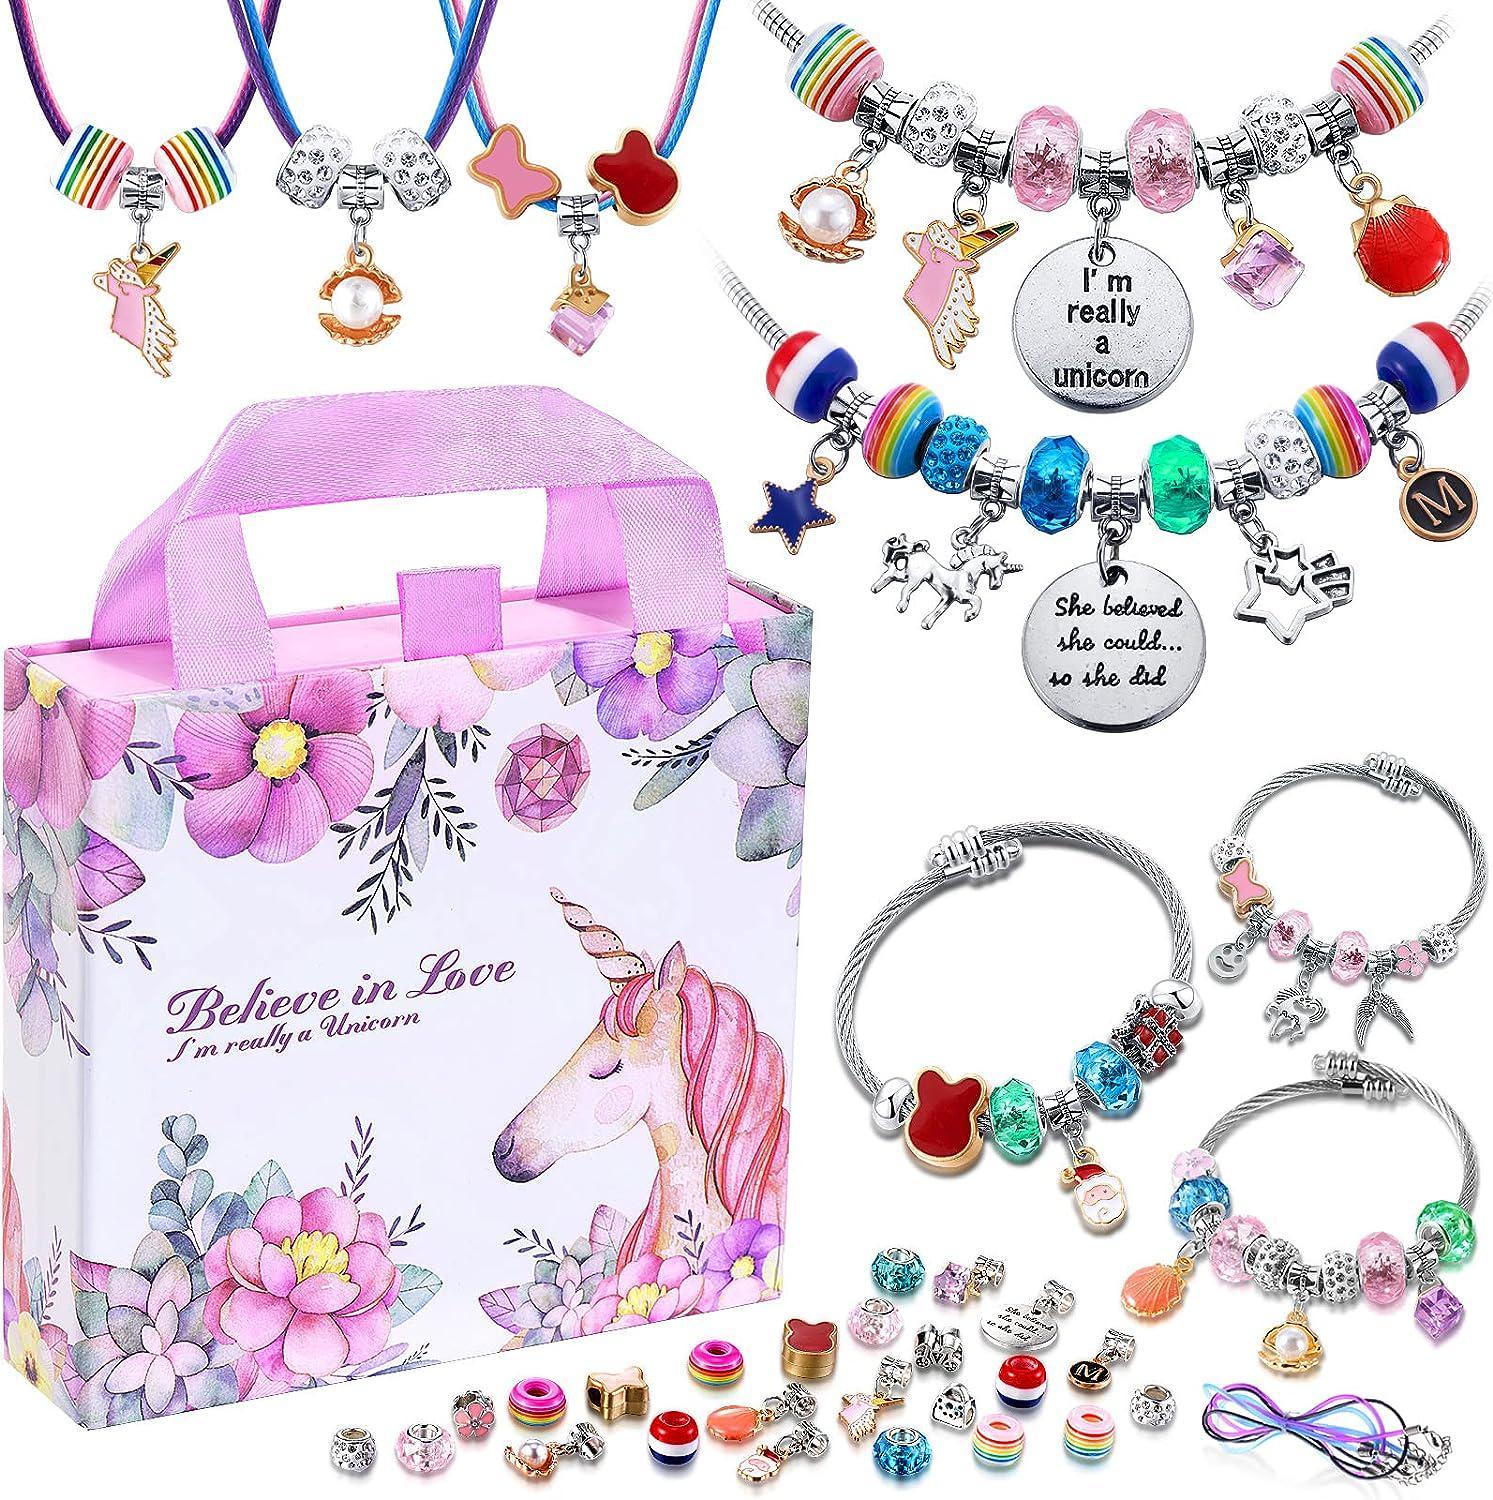  Make It Real - Juicy Couture Trendy Tassels Bracelet Making Kit  - Kids Jewelry Making Kit - DIY Beads & Charm Bracelet Making Kit for Girls  - Friendship Bracelets with Beads